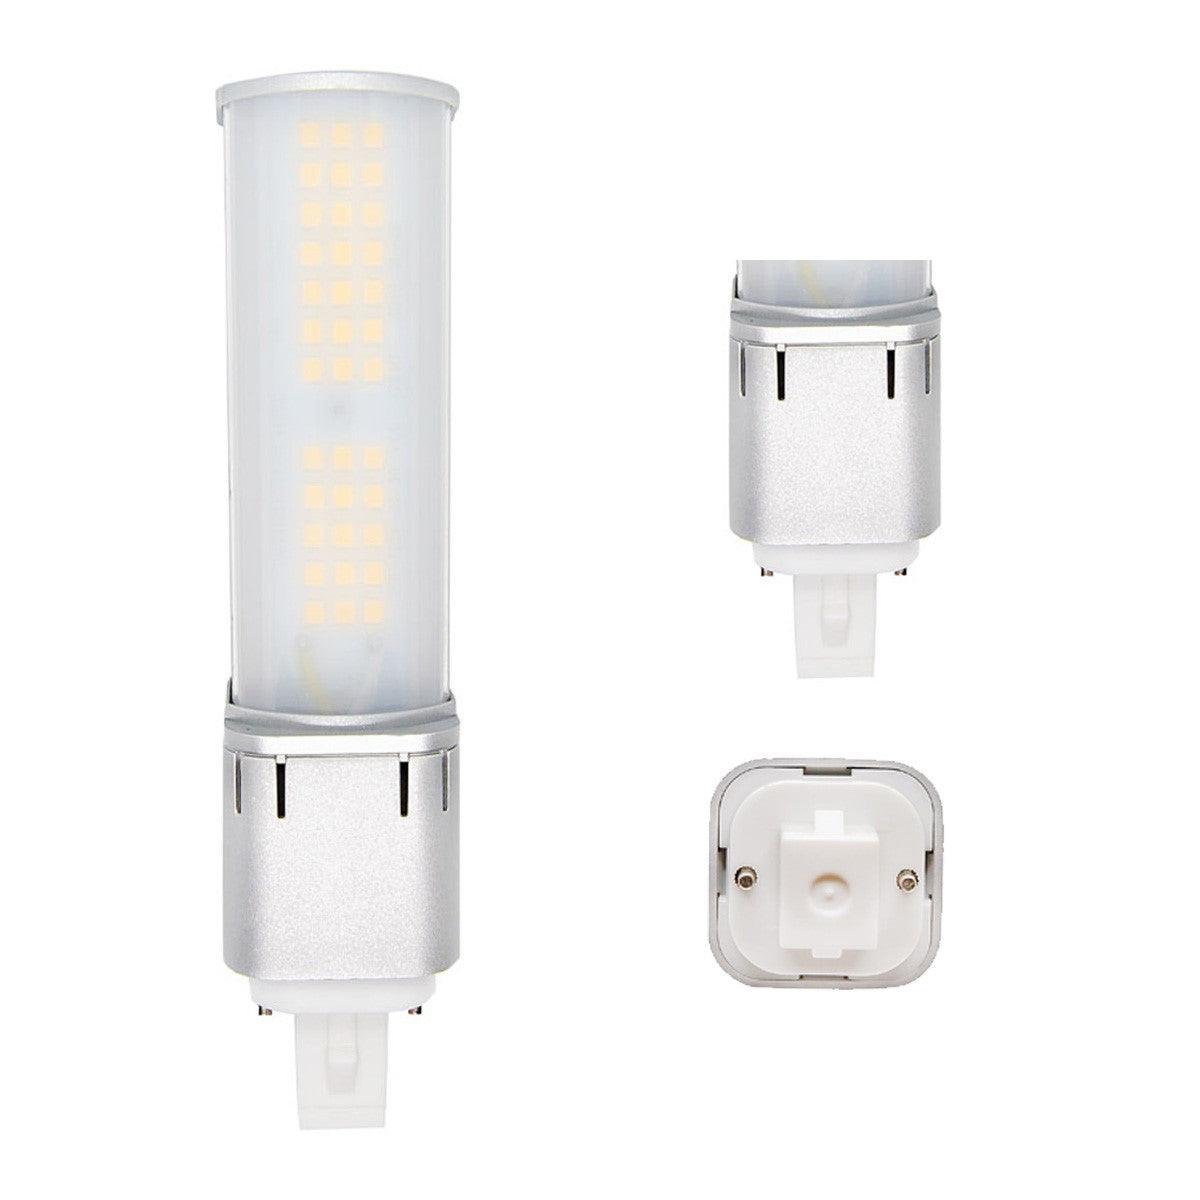 2 pin PL LED Bulb, 7 Watt 920 Lumens, 5000K, Horizontal, Replaces 13W CFL, G23 Base, Direct Or Bypass - Bees Lighting